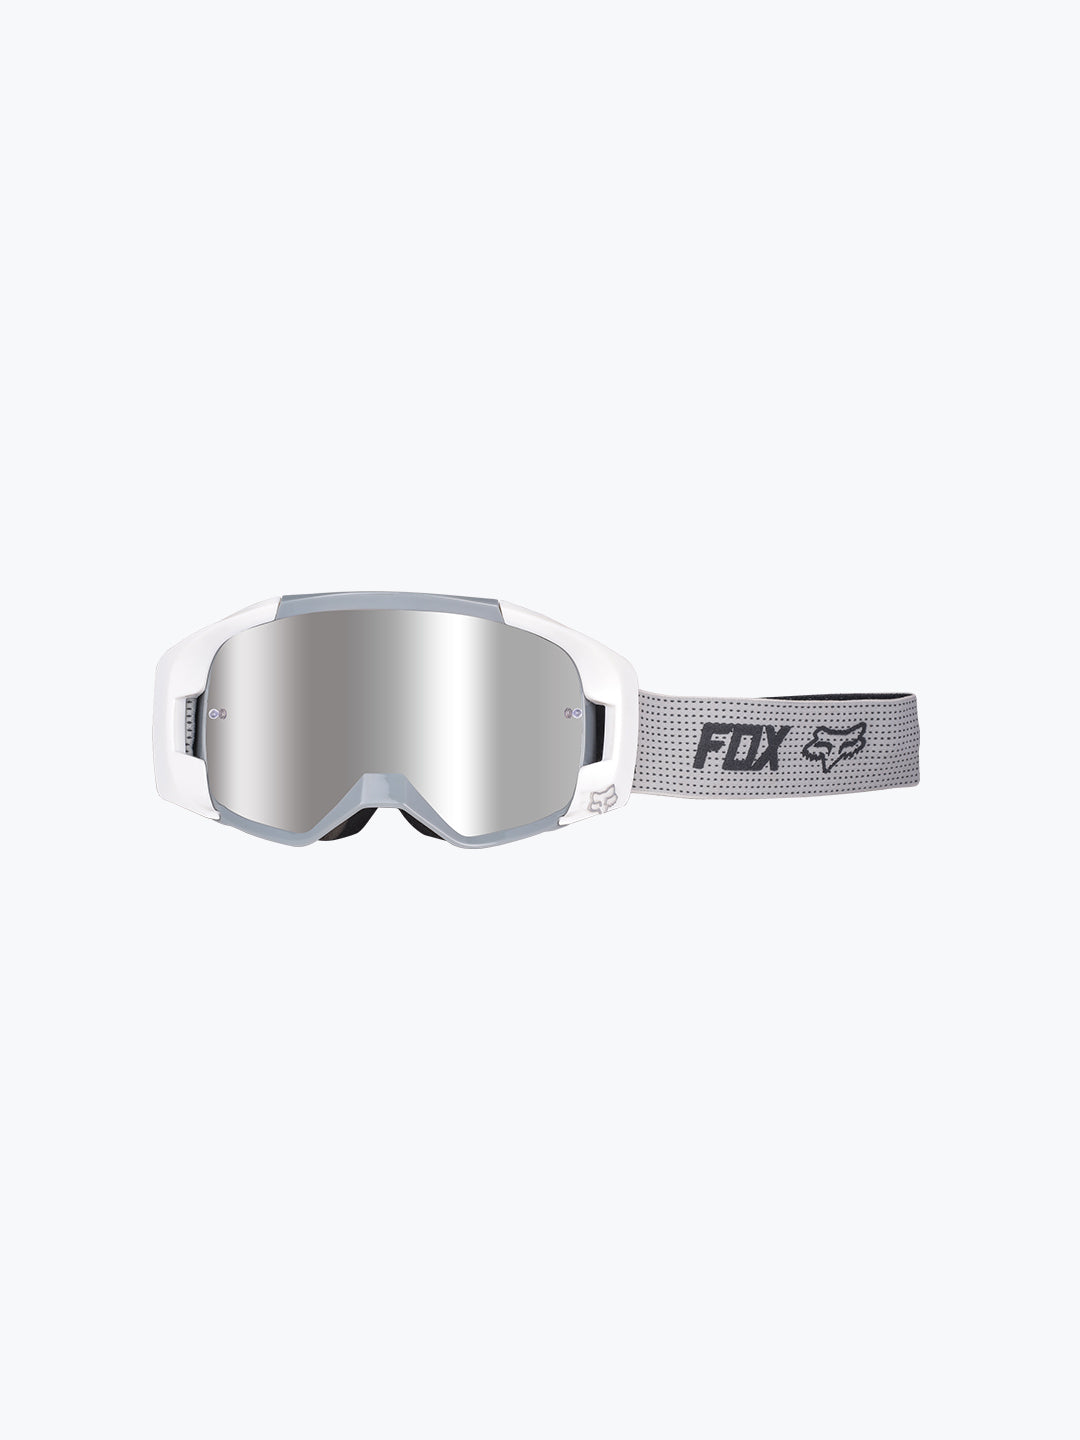 Goggles Fox 114 White Chrome Tint